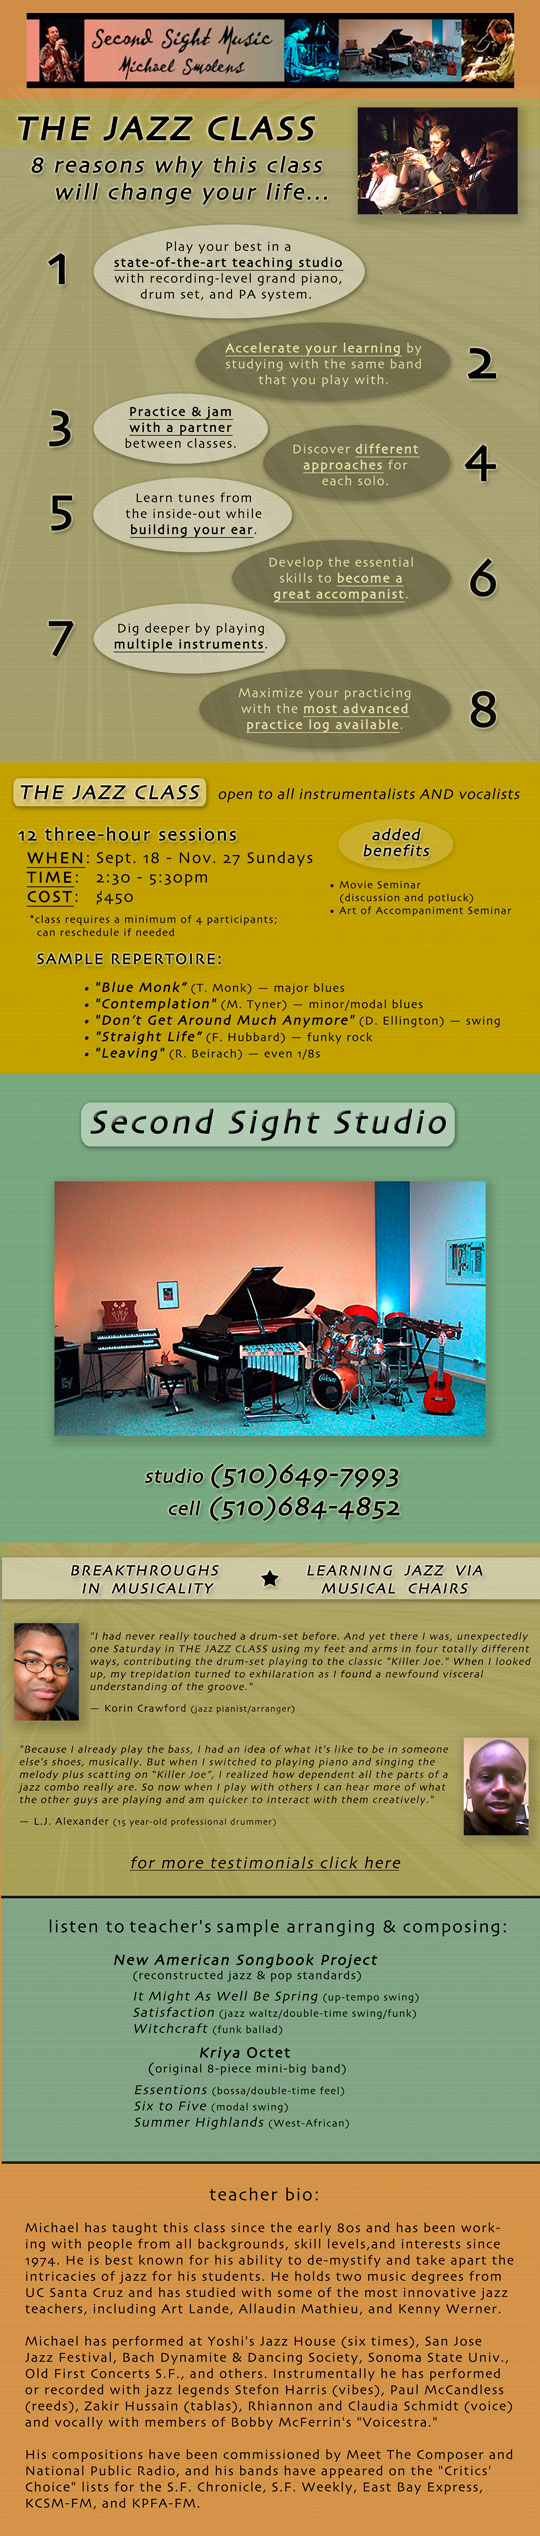 Michael Smolens' Jazz Class at Second Sight Music Studios